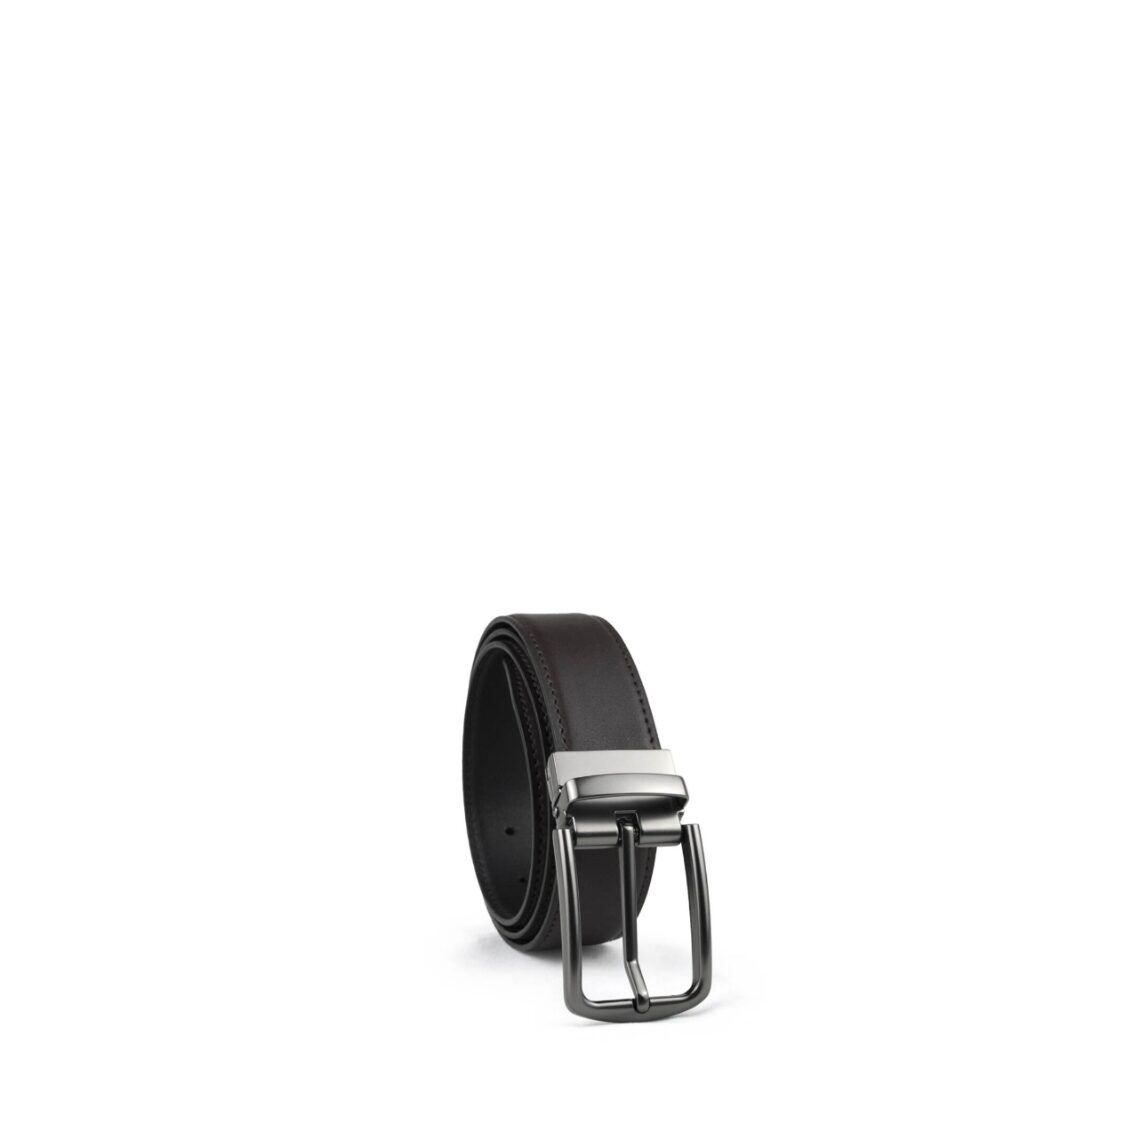 Picard Hanover Auto Lock Leather Belt 35mm120cm Black